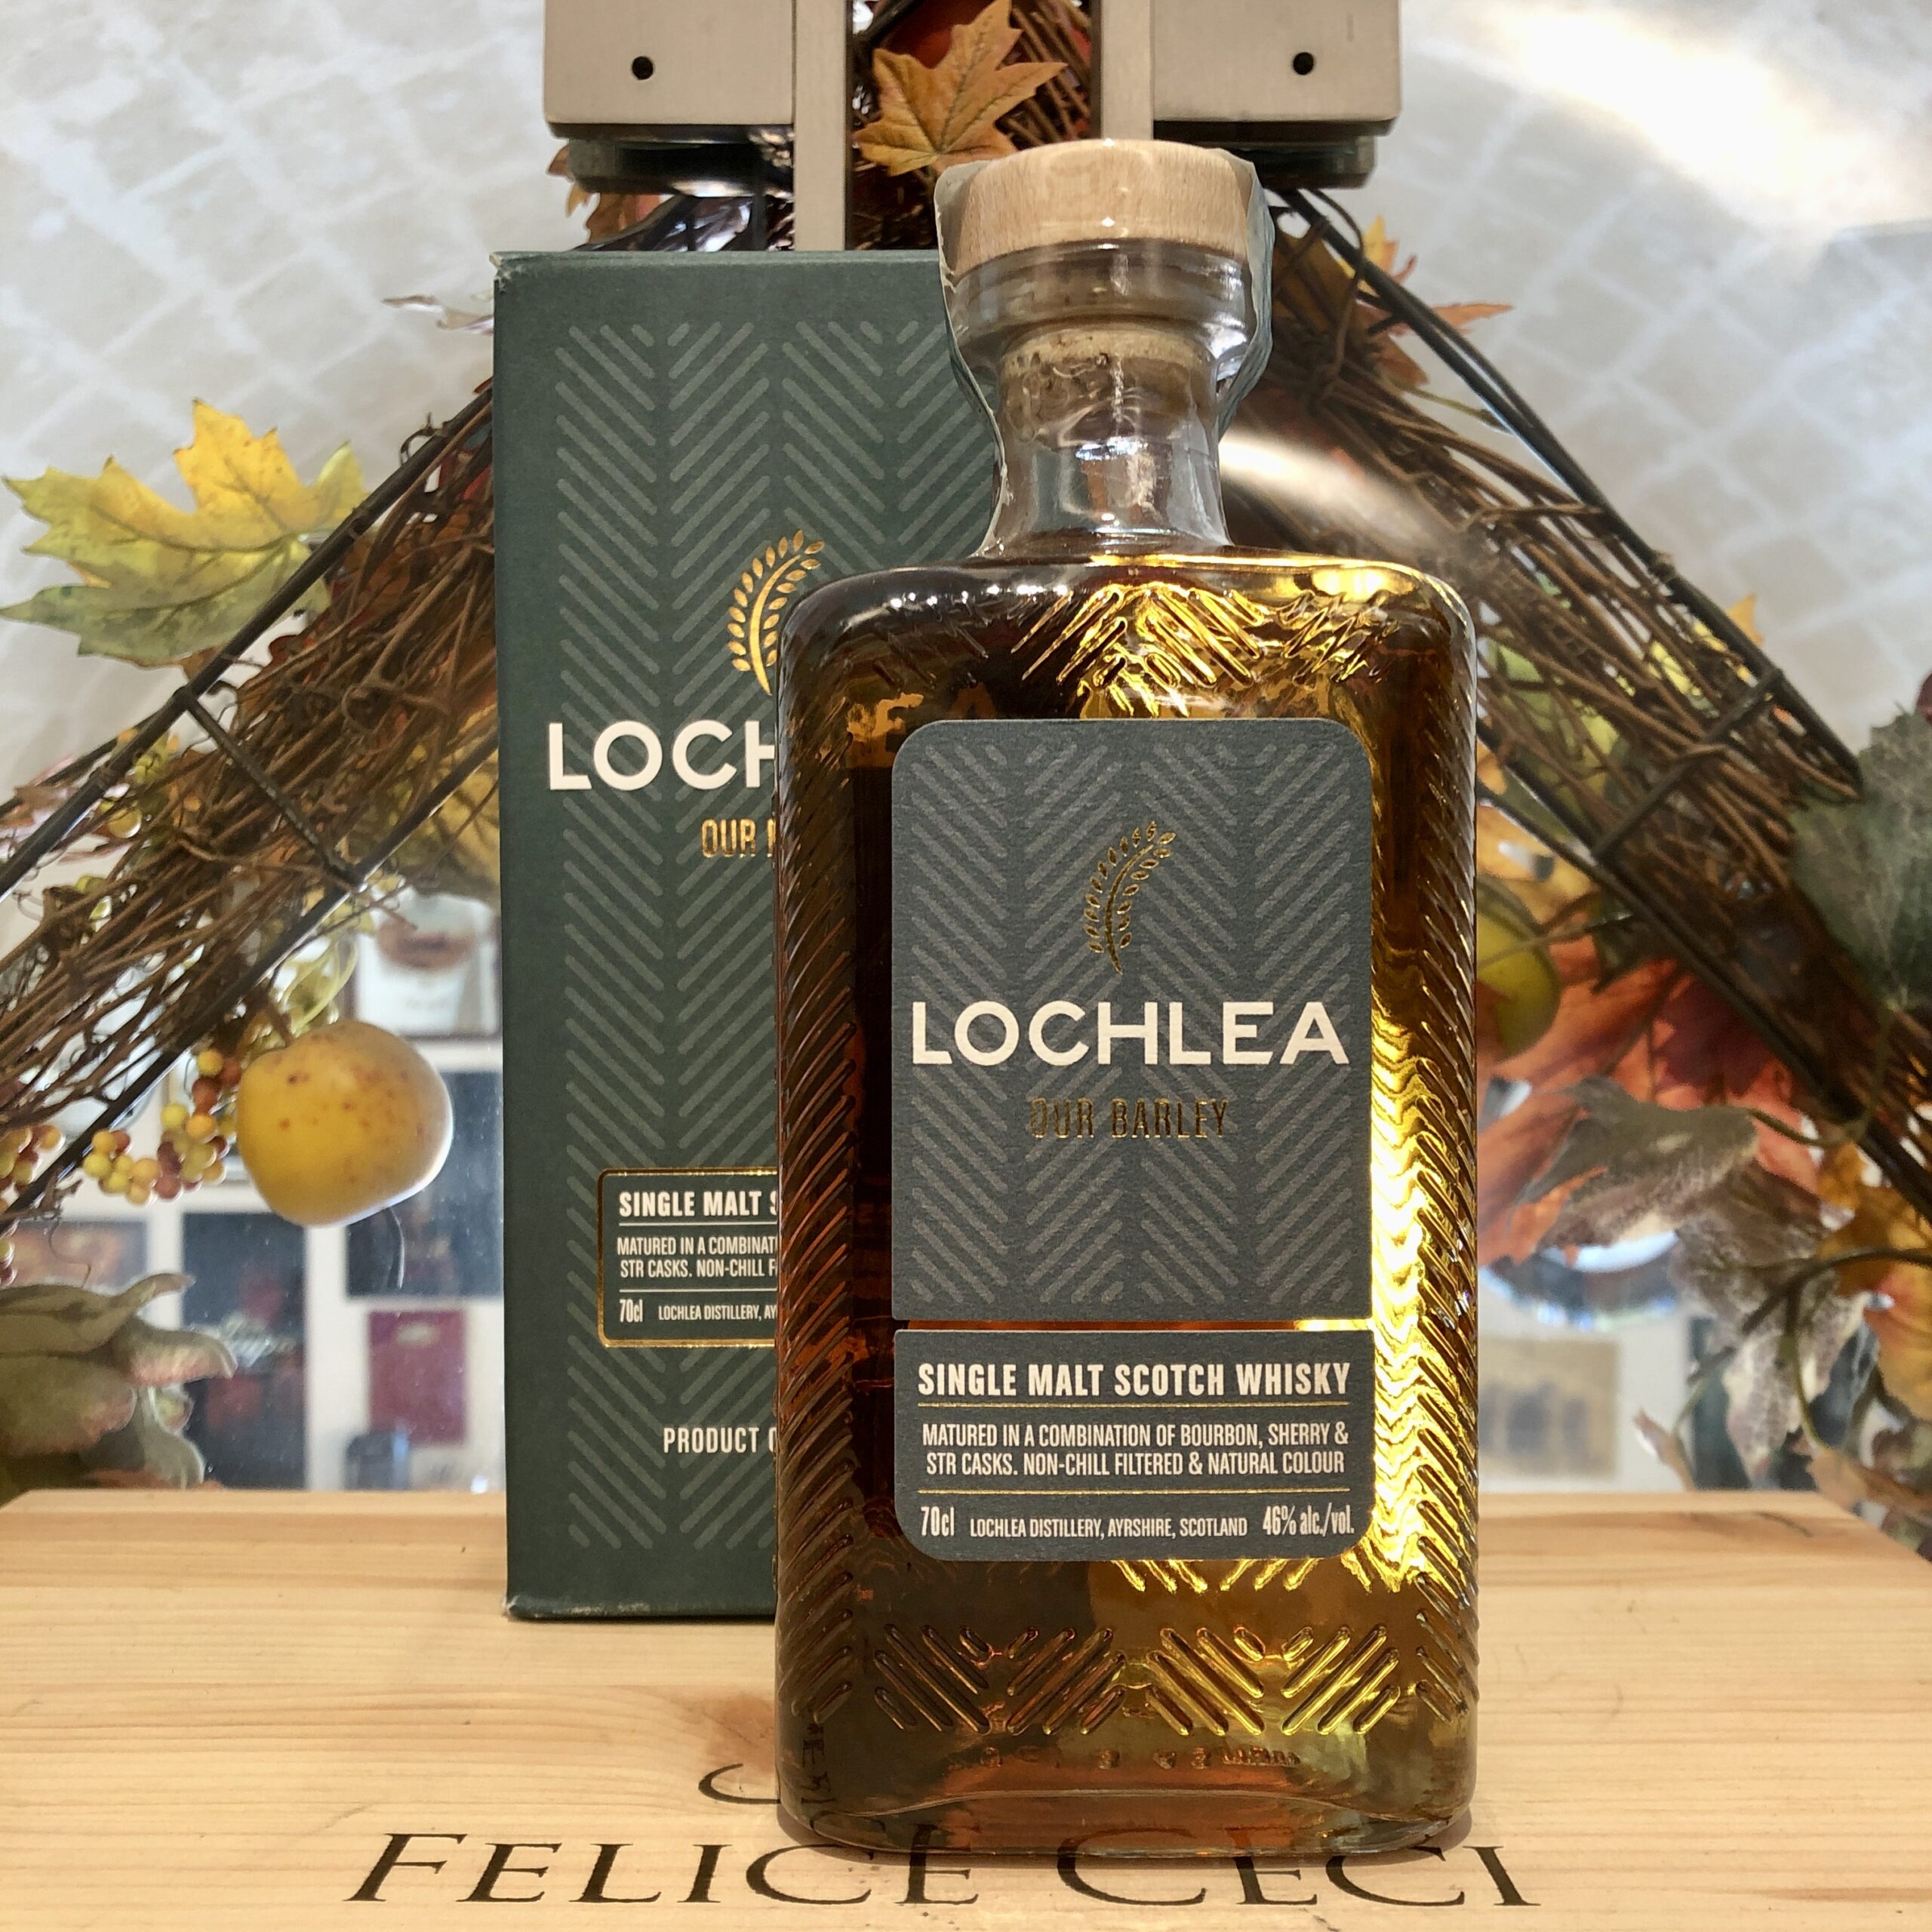 Lochlea Our Barley Lowlands Single Malt Scotch Whisky